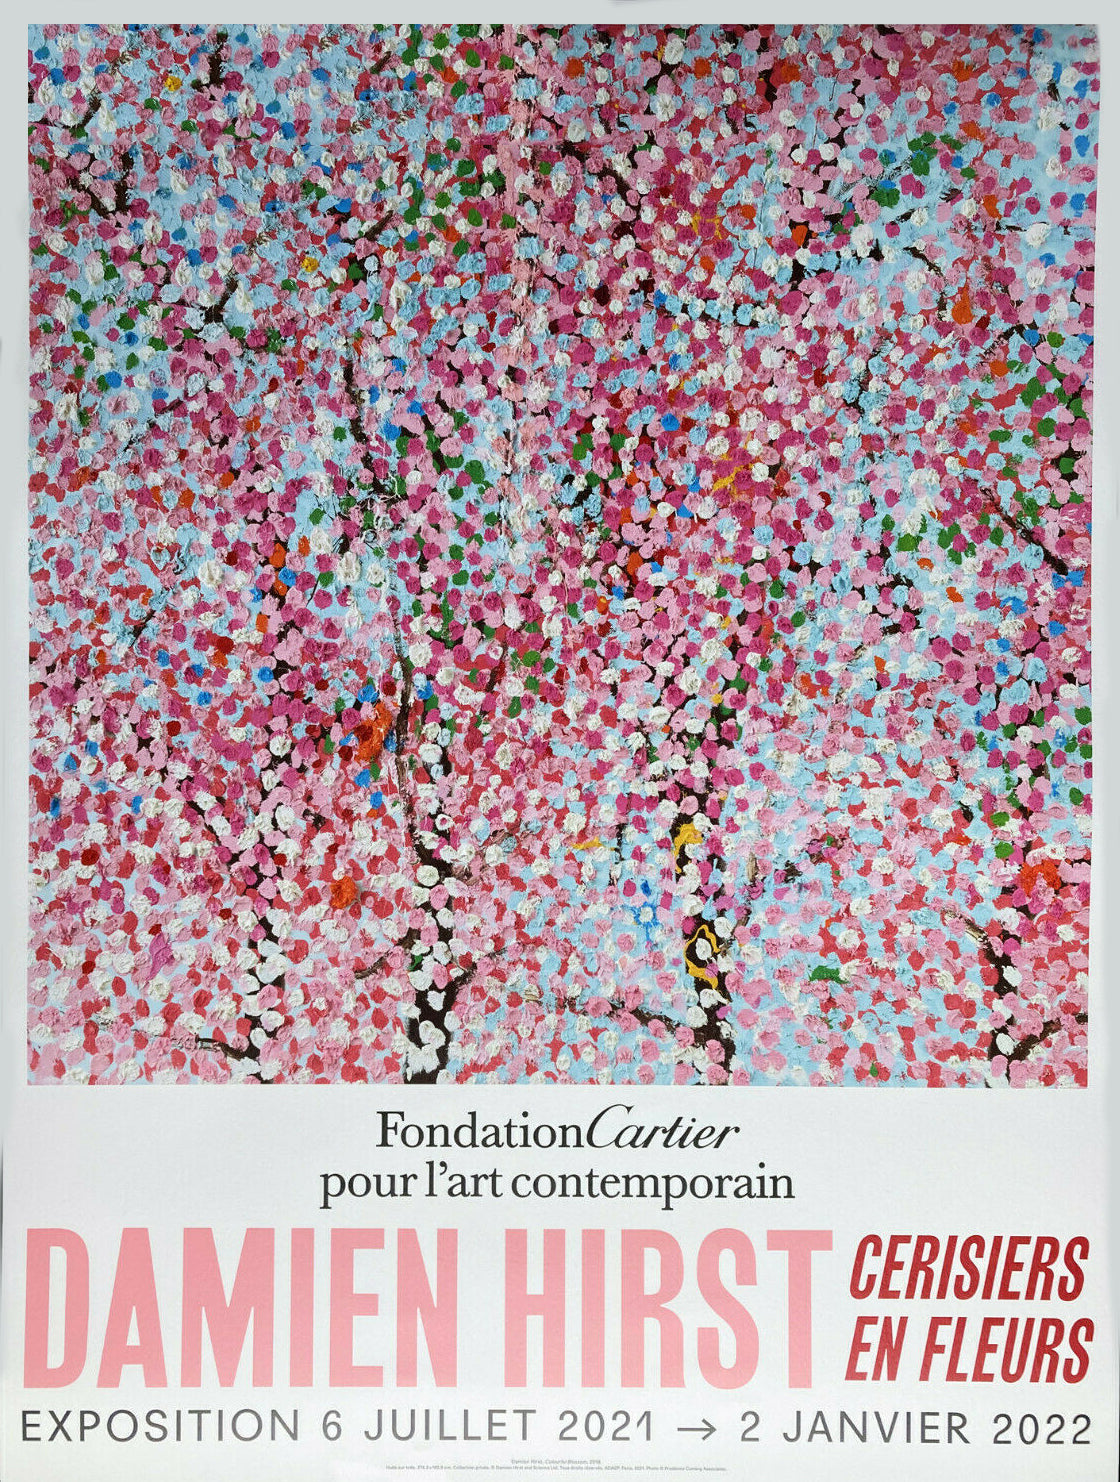 Damien Hirst - Cherry Blossom - Fondation Cartier Paris ©, Original exhibition poster 5/6